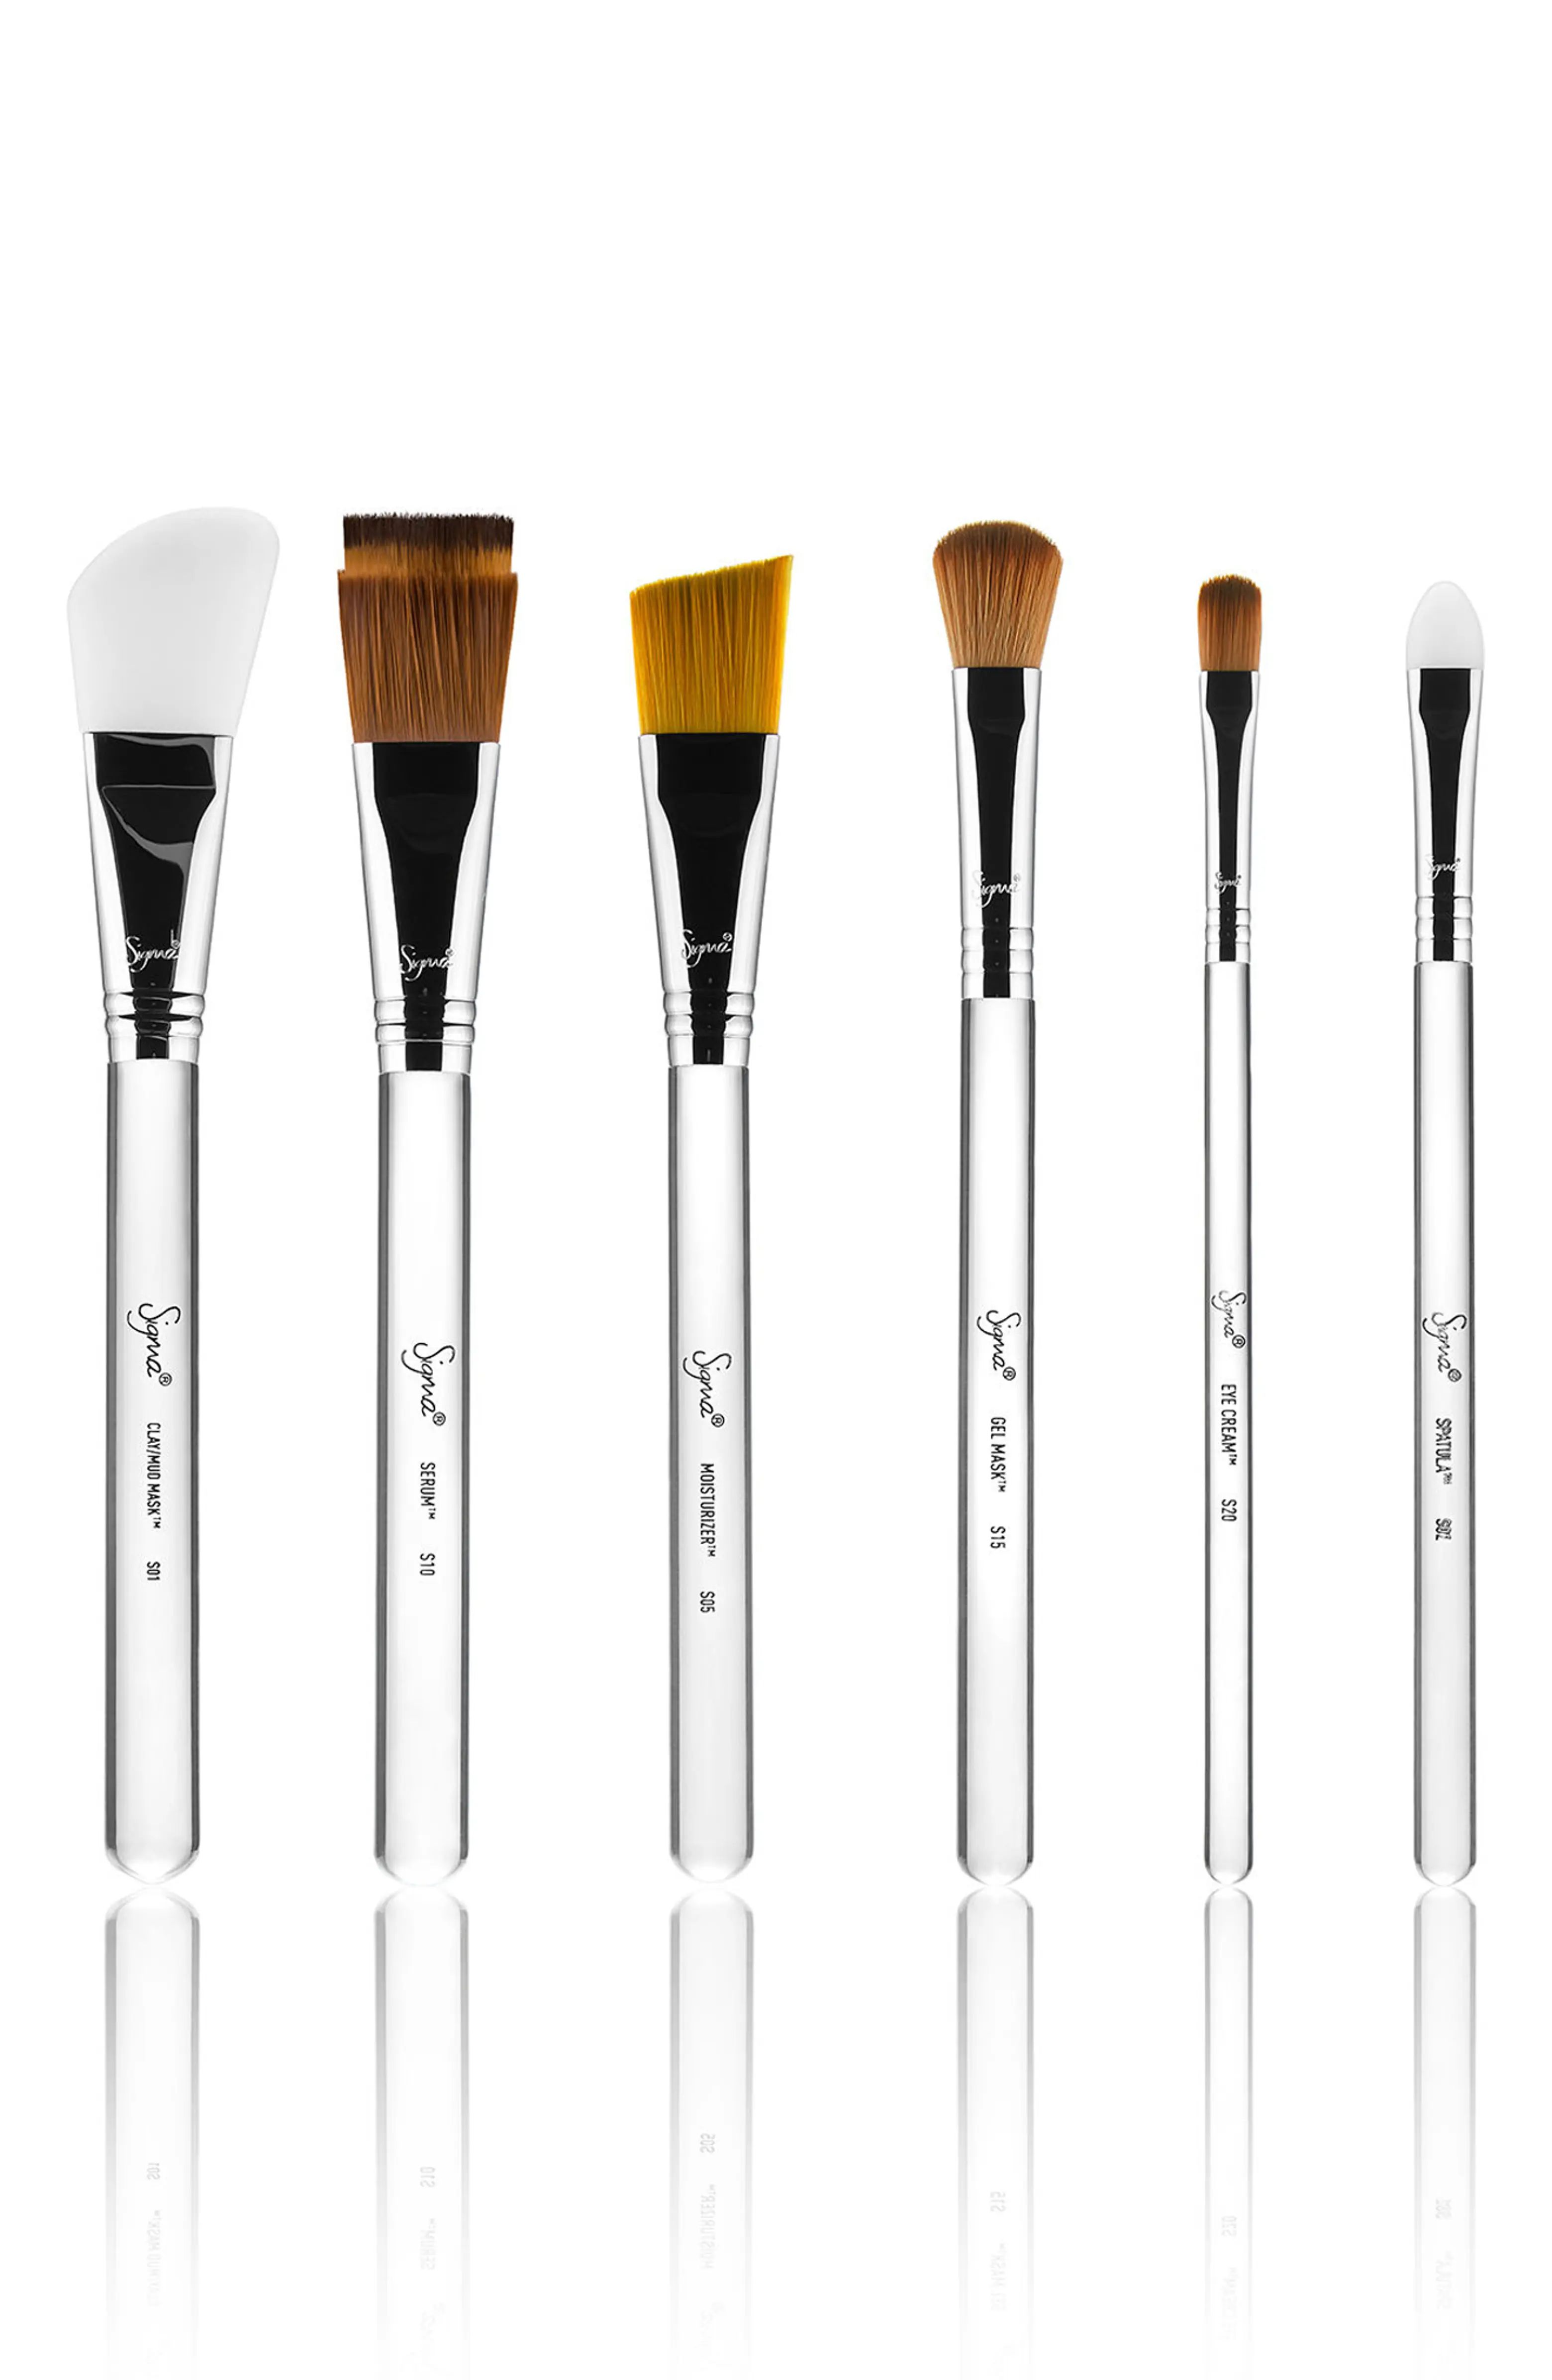 Sigma Skincare Brush Set | Nordstrom